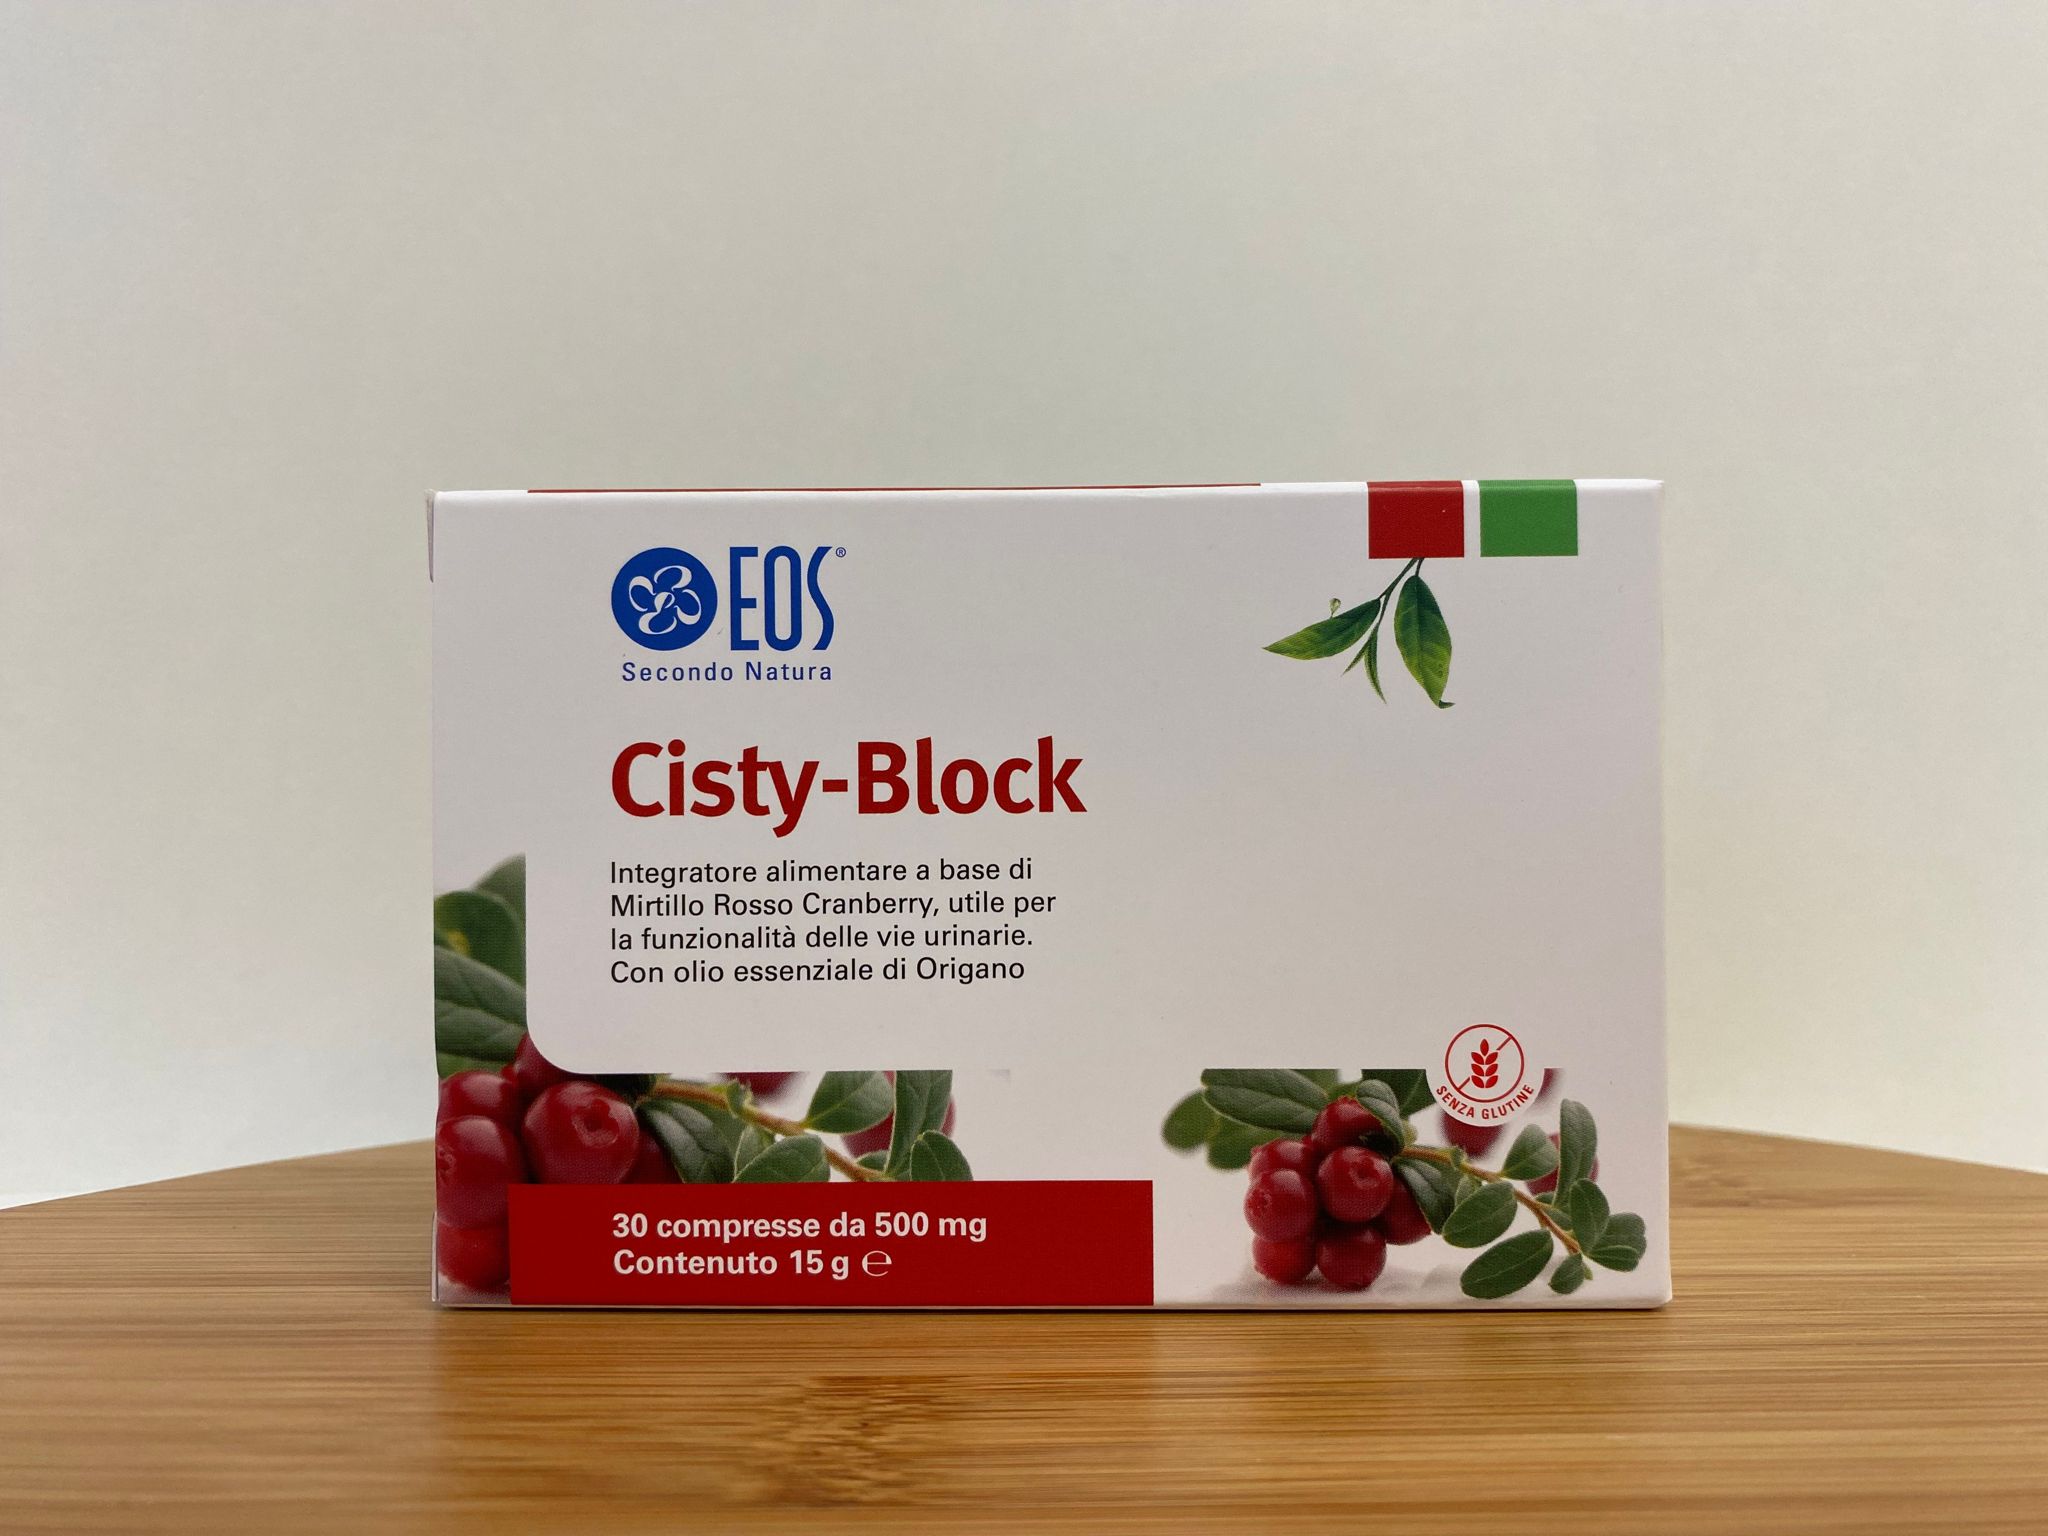 EOS: Cisty-Block